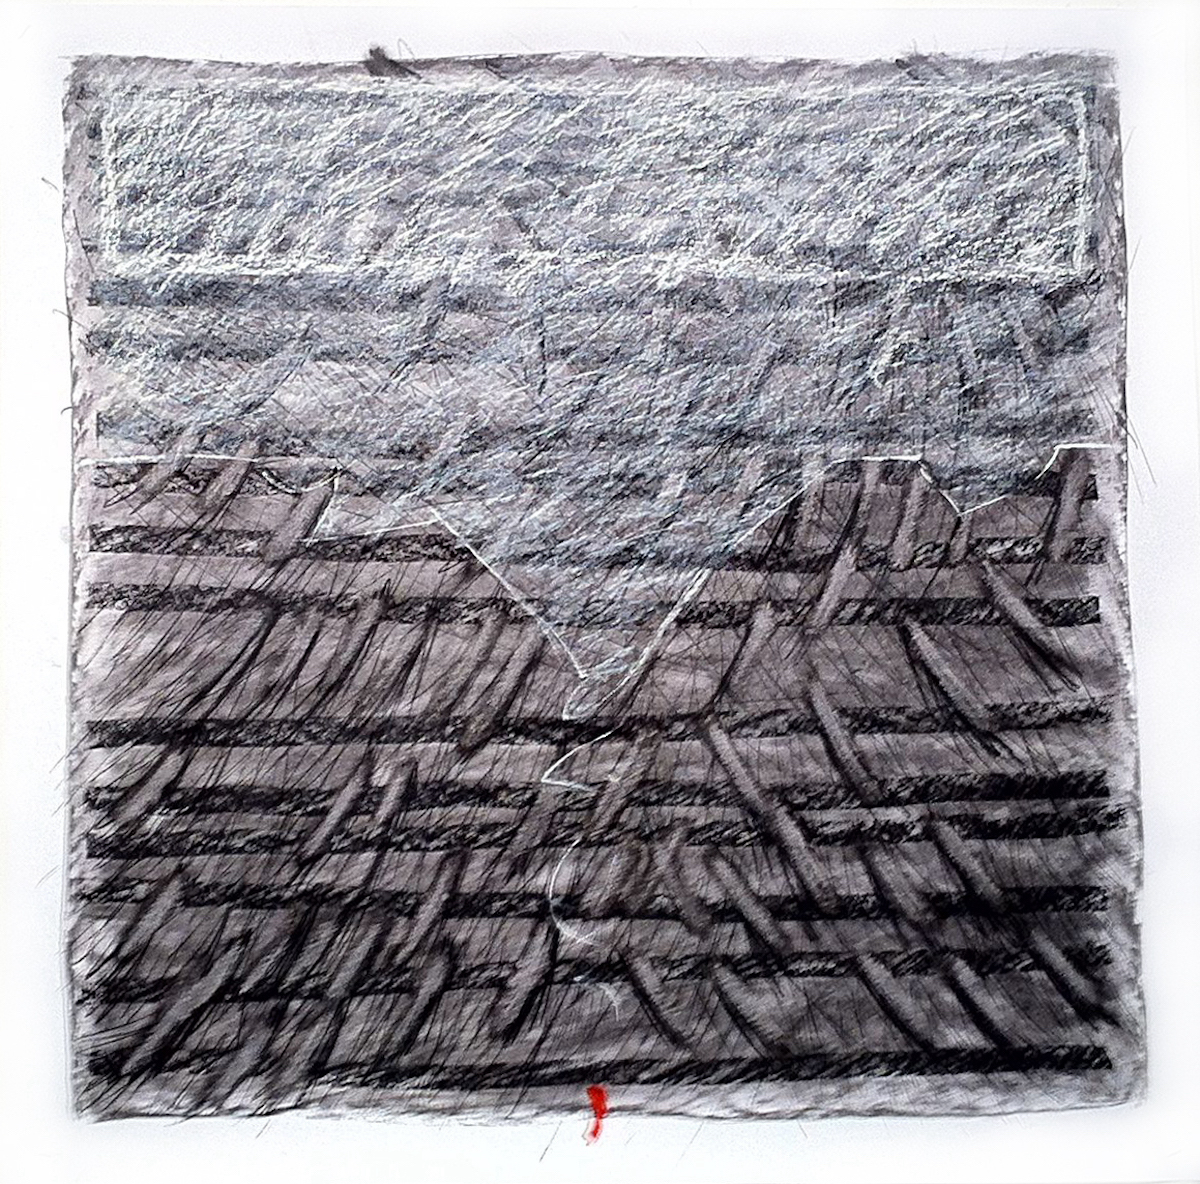 David Edward Shurbutt, Cueva de la Pileta, 2013, Charcoal, graphite and pastel on paper